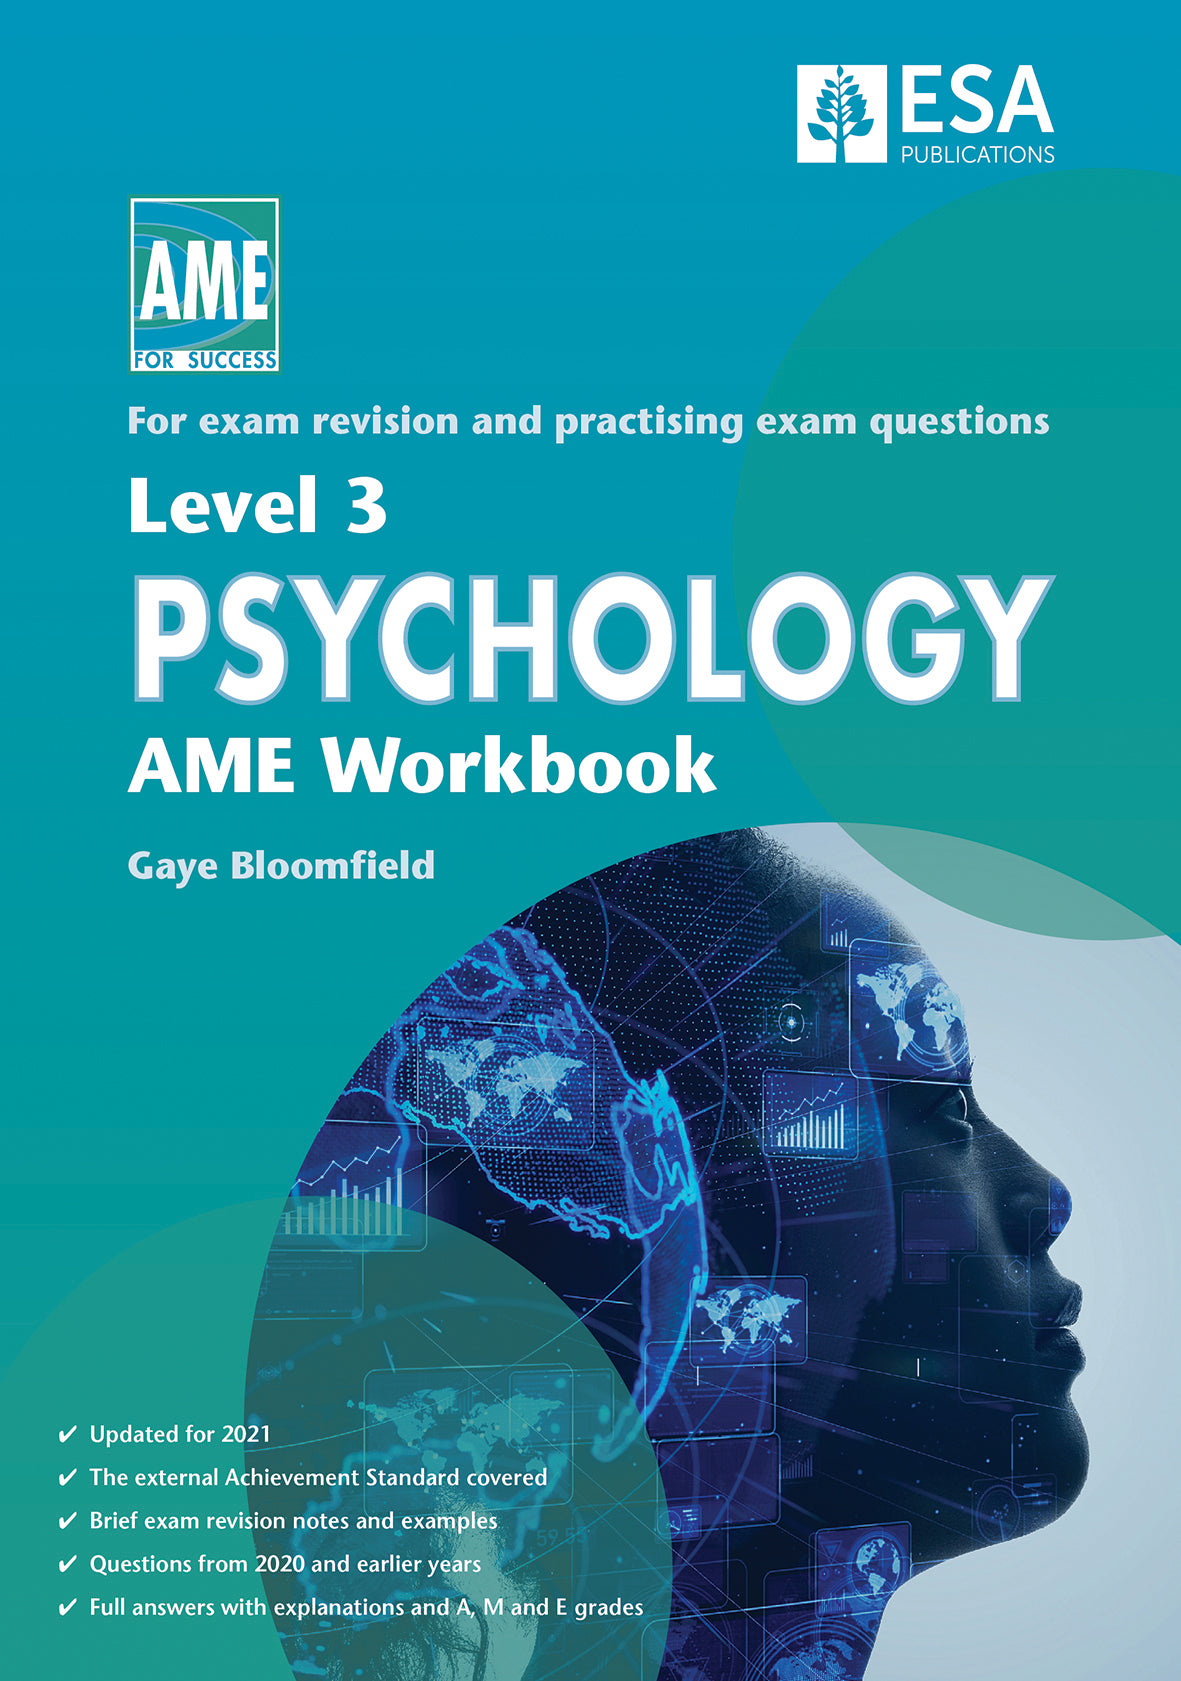 Level 3 Psychology AME Workbook